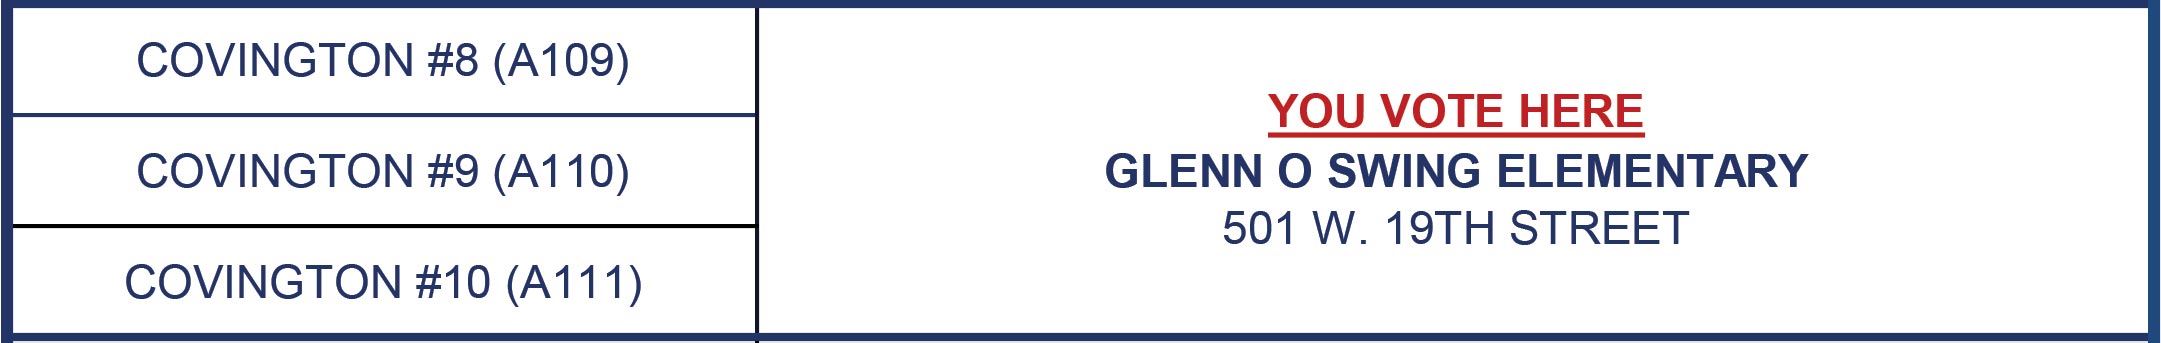 Glenn O Swing Elementary